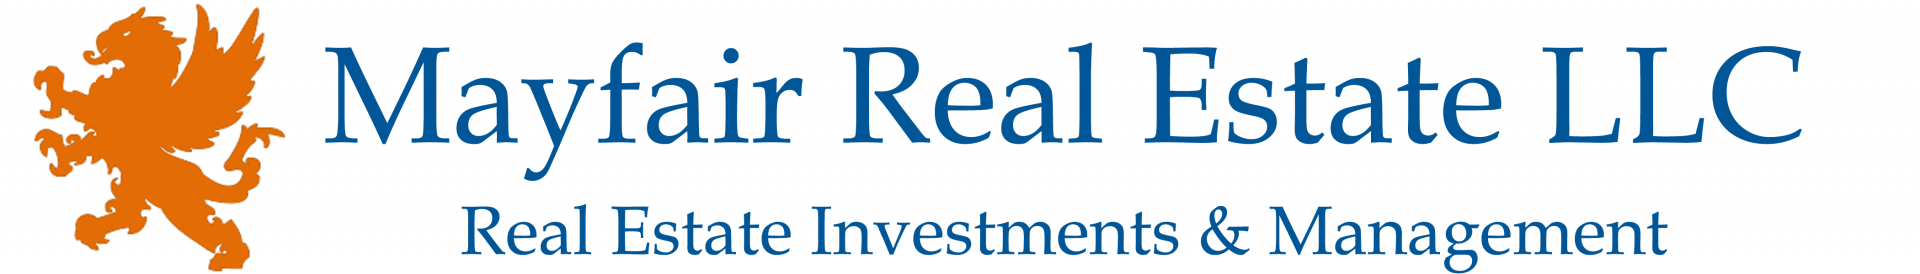 Mayfair Real Estate LLC logo